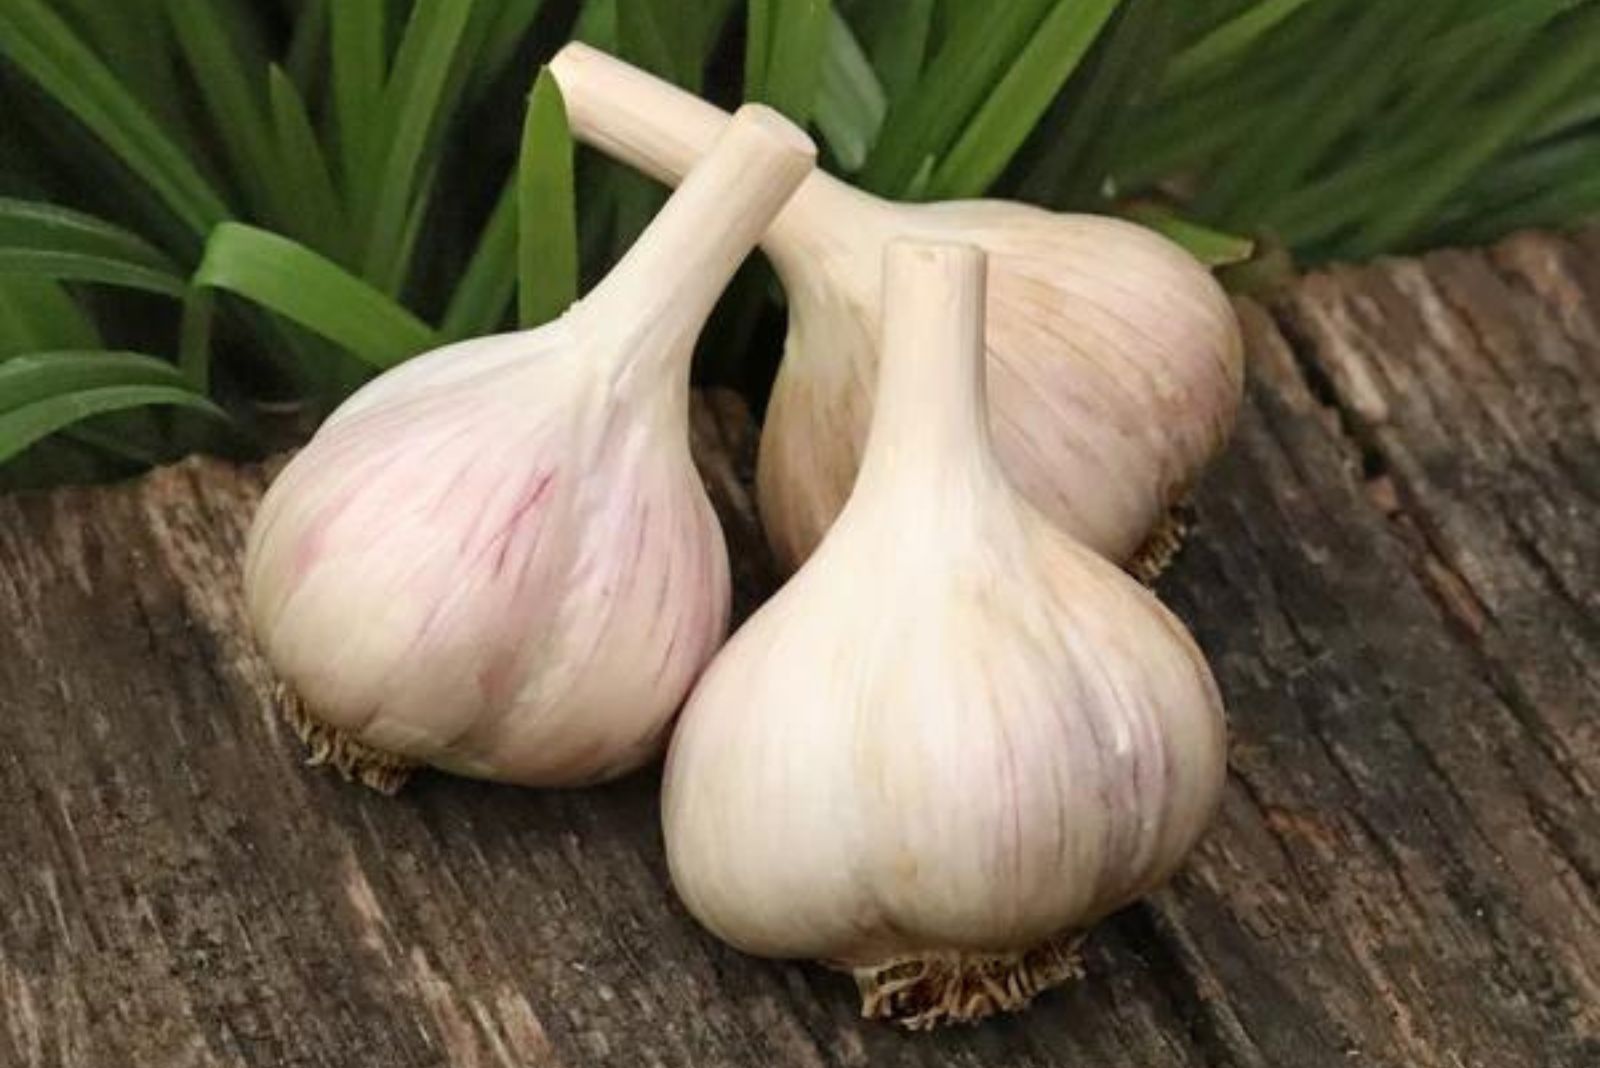 Romanian Red garlic